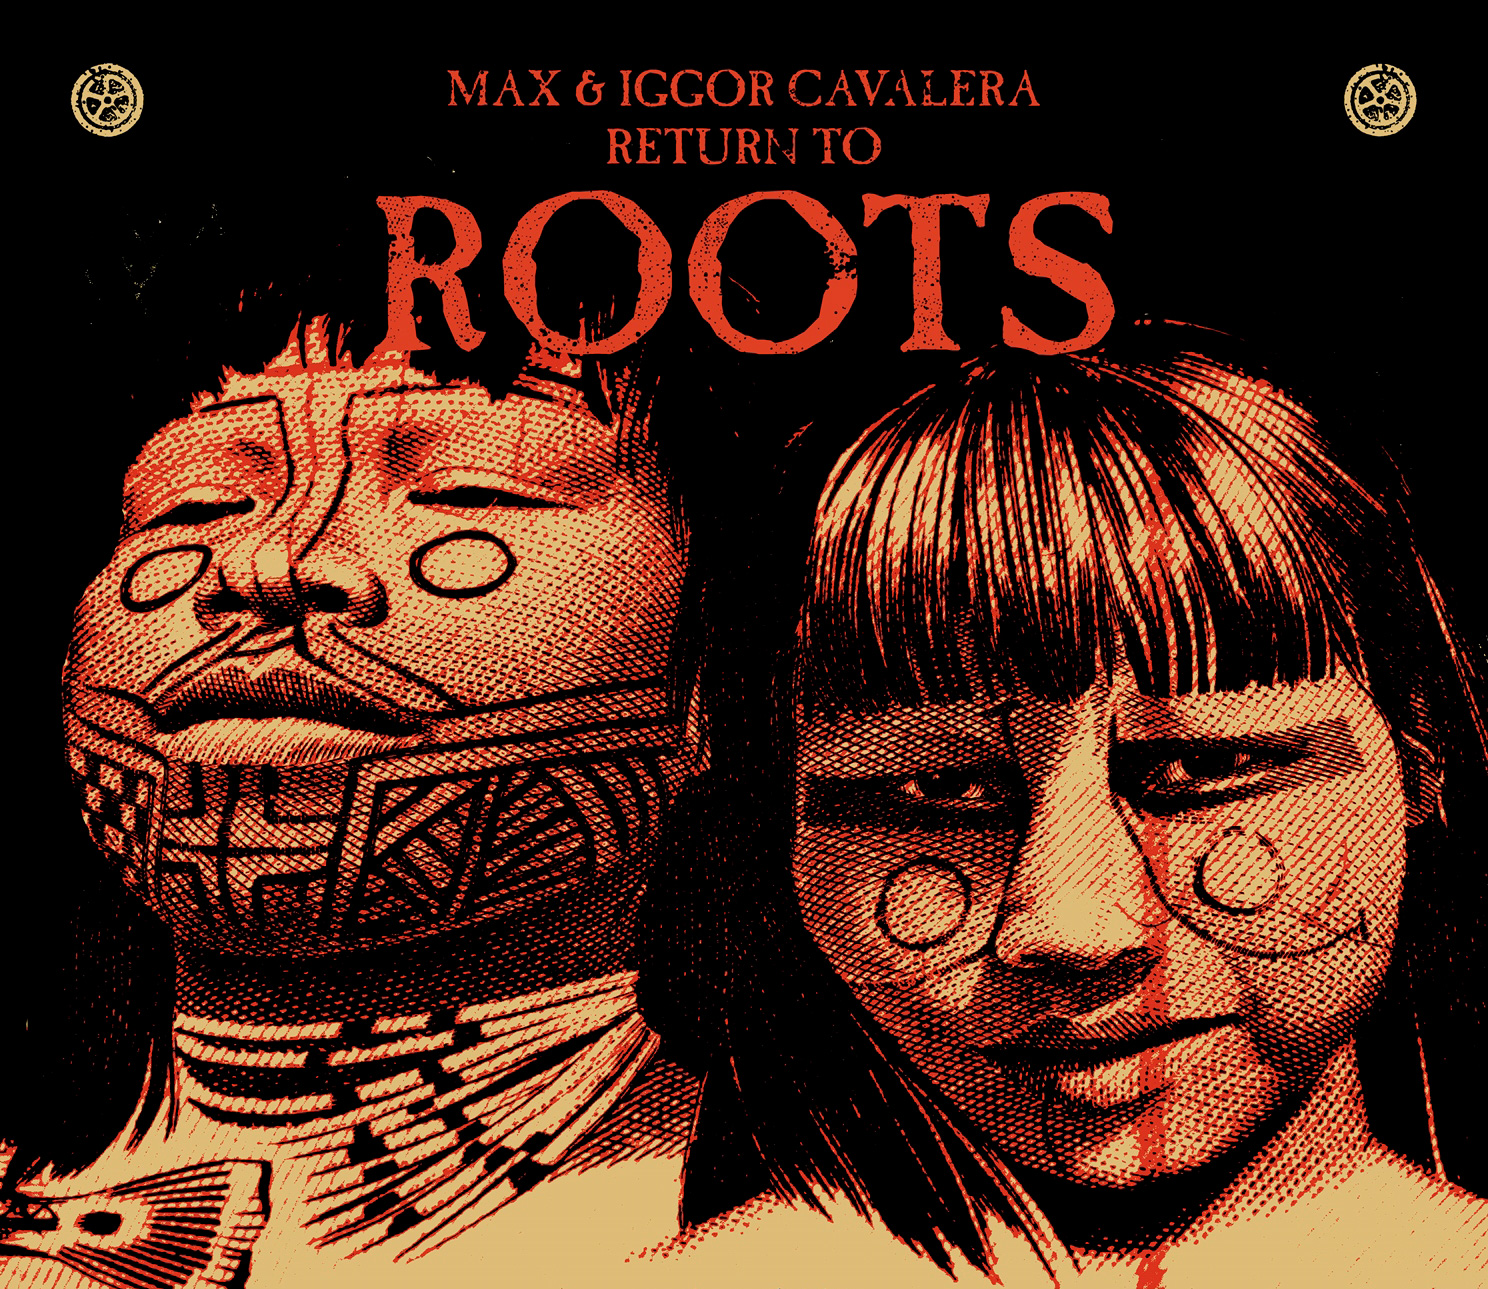 MAX & IGGOR CAVALERA ( Cavalera Conspiracy ) are hitting the road